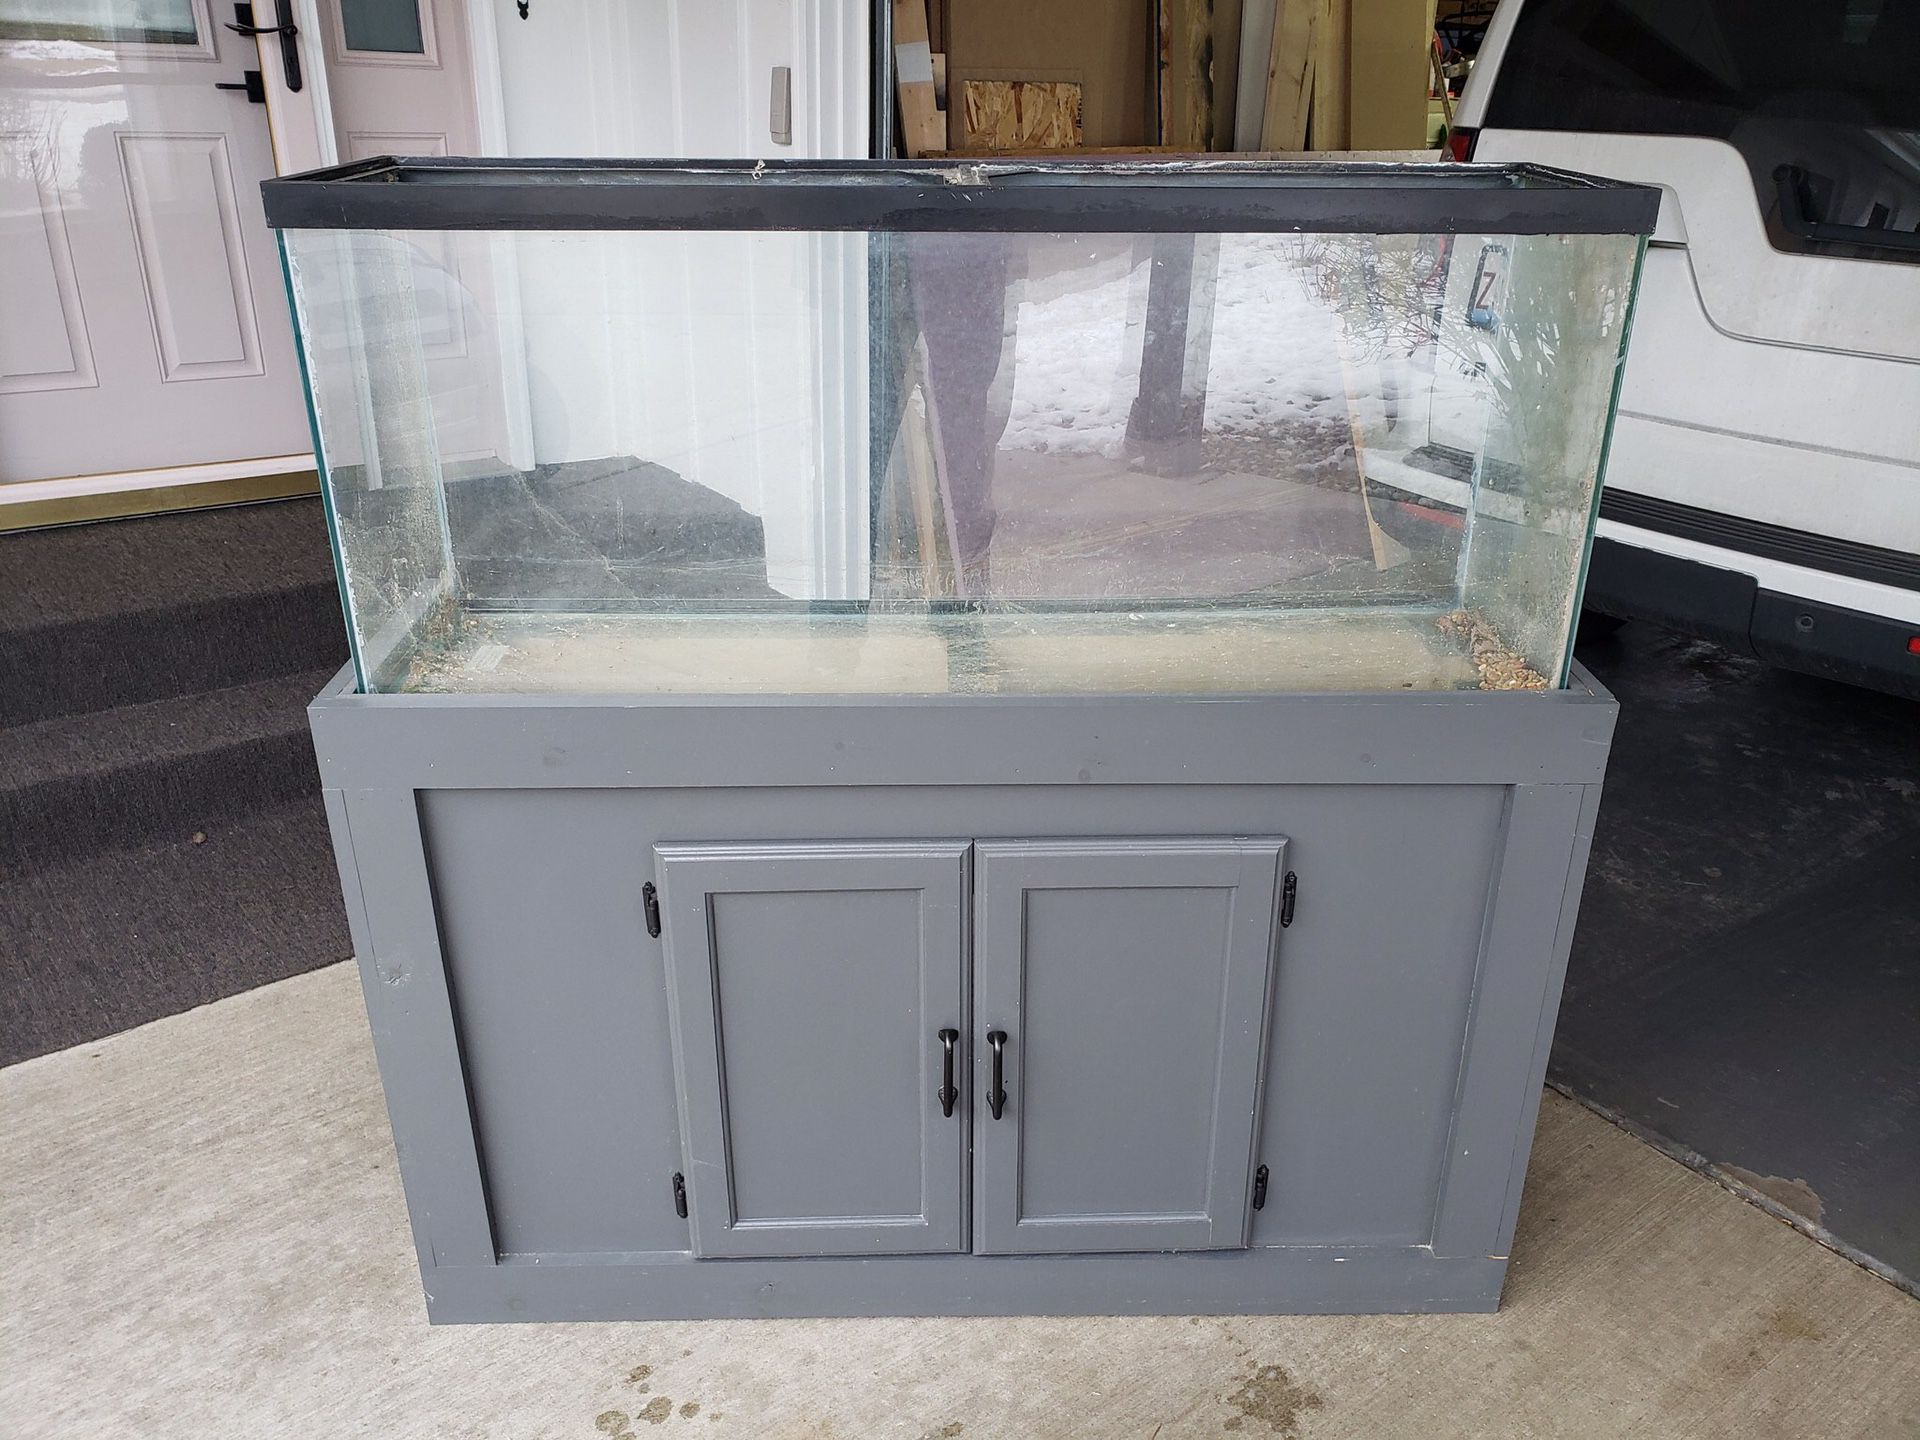 55 gallon fish tank with custom stand